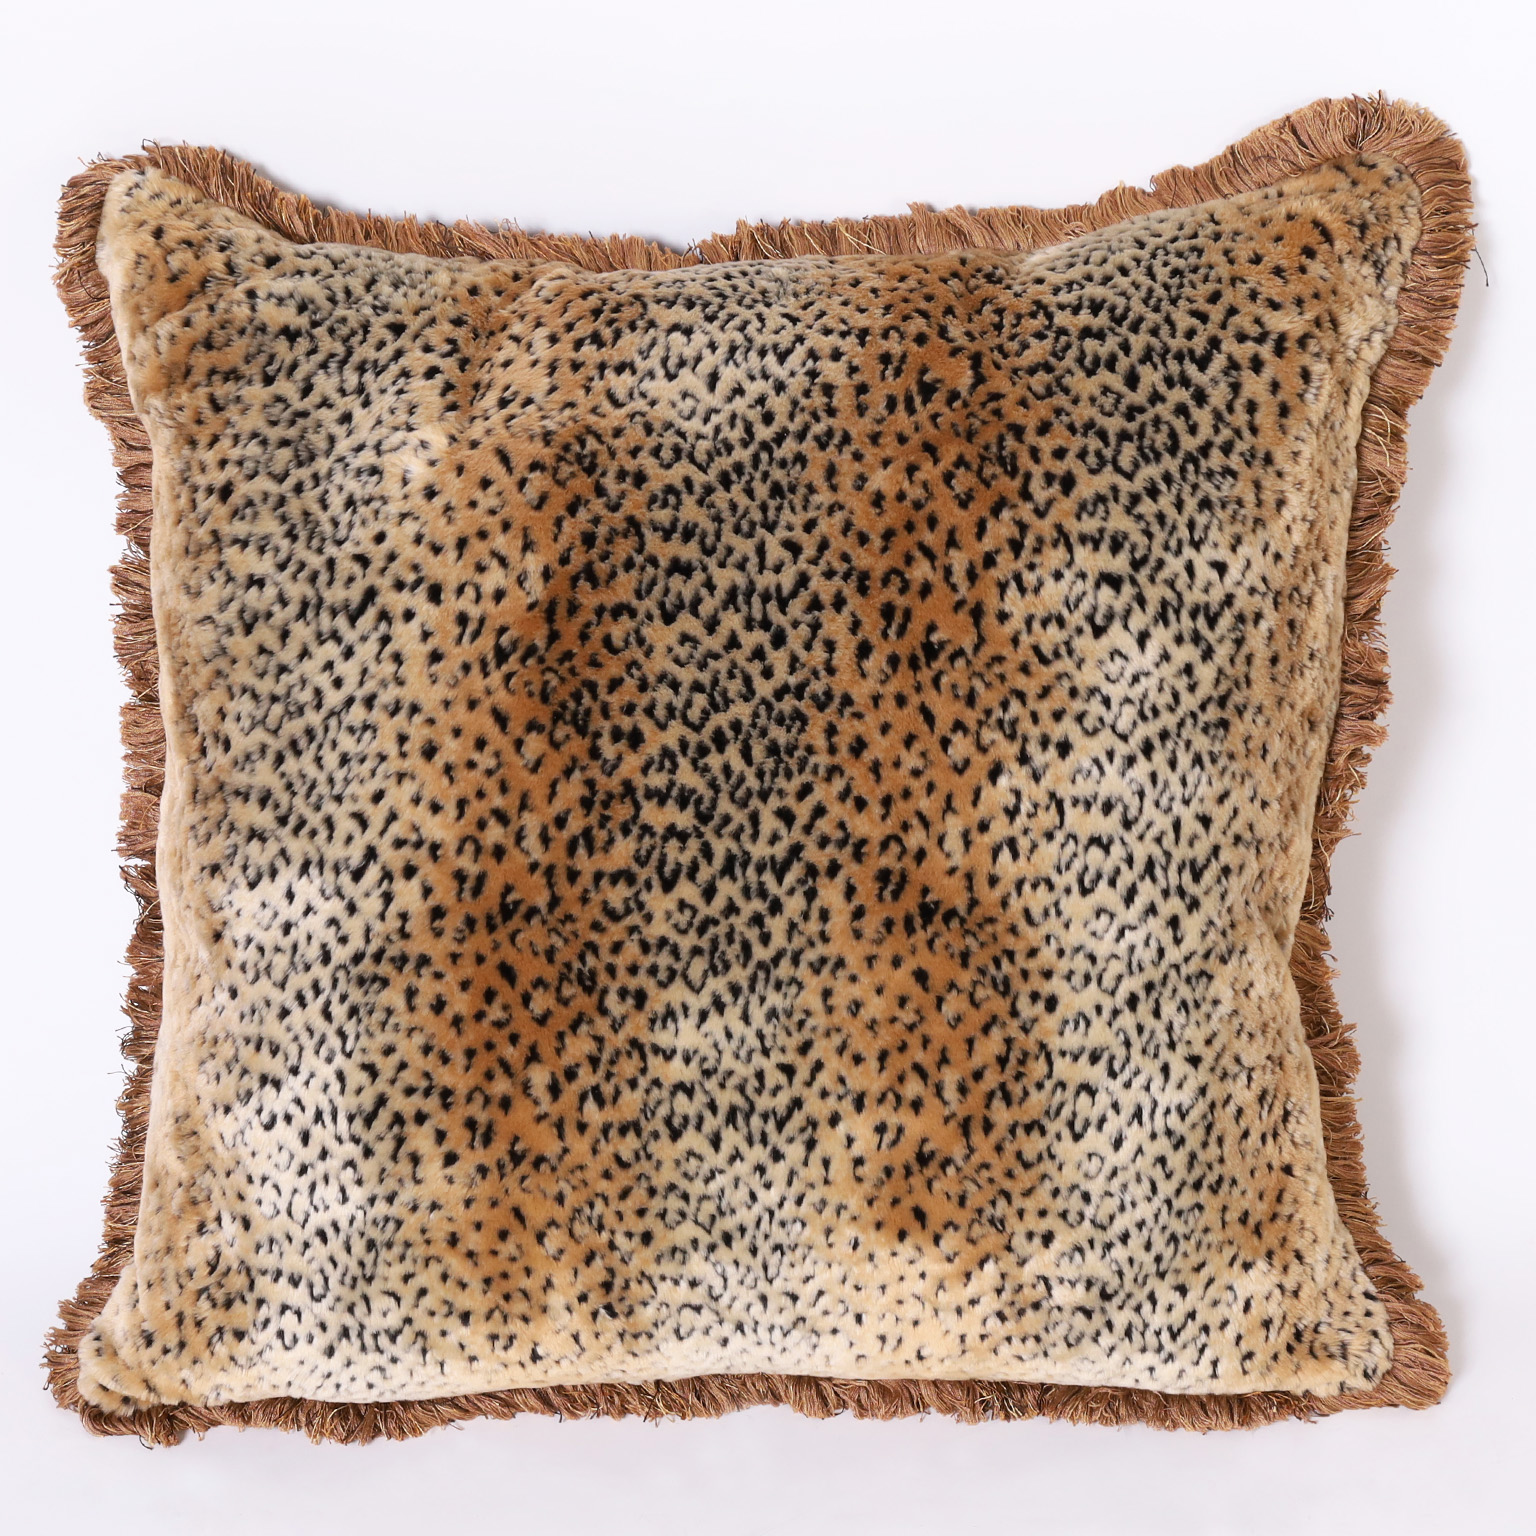 Custom Leopard Print Oversize Pillows